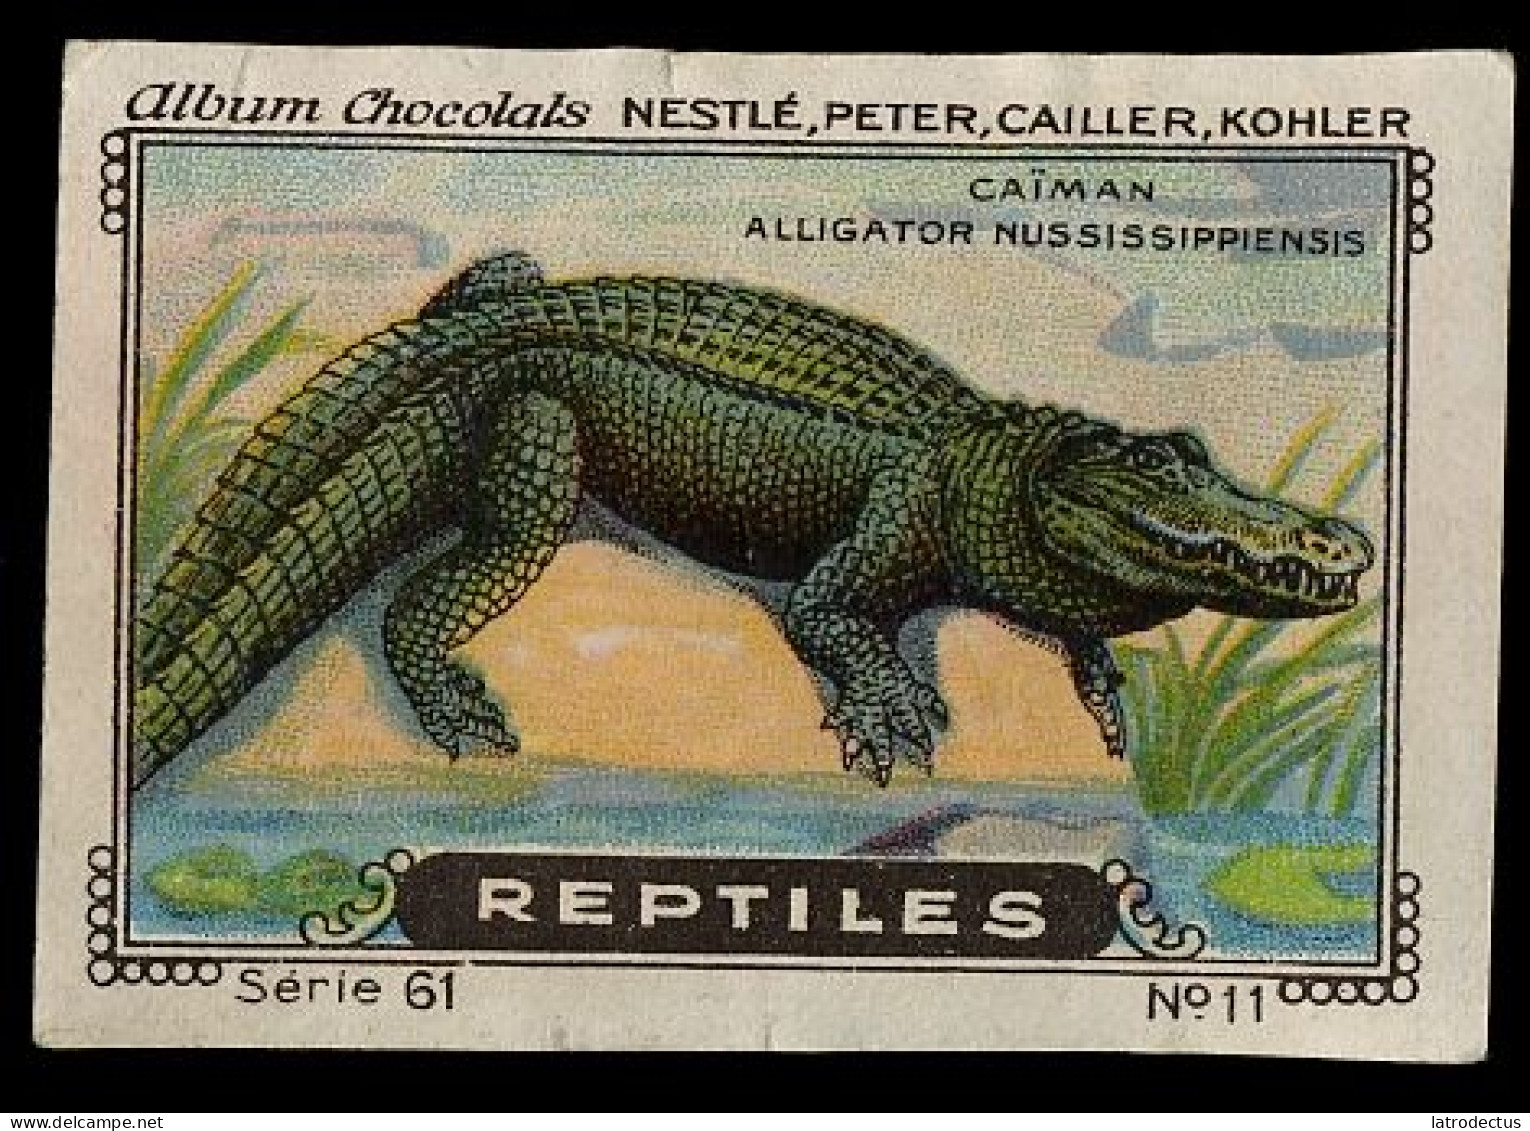 Nestlé - 61 - Reptiles - 11 - Alligator - Nestlé